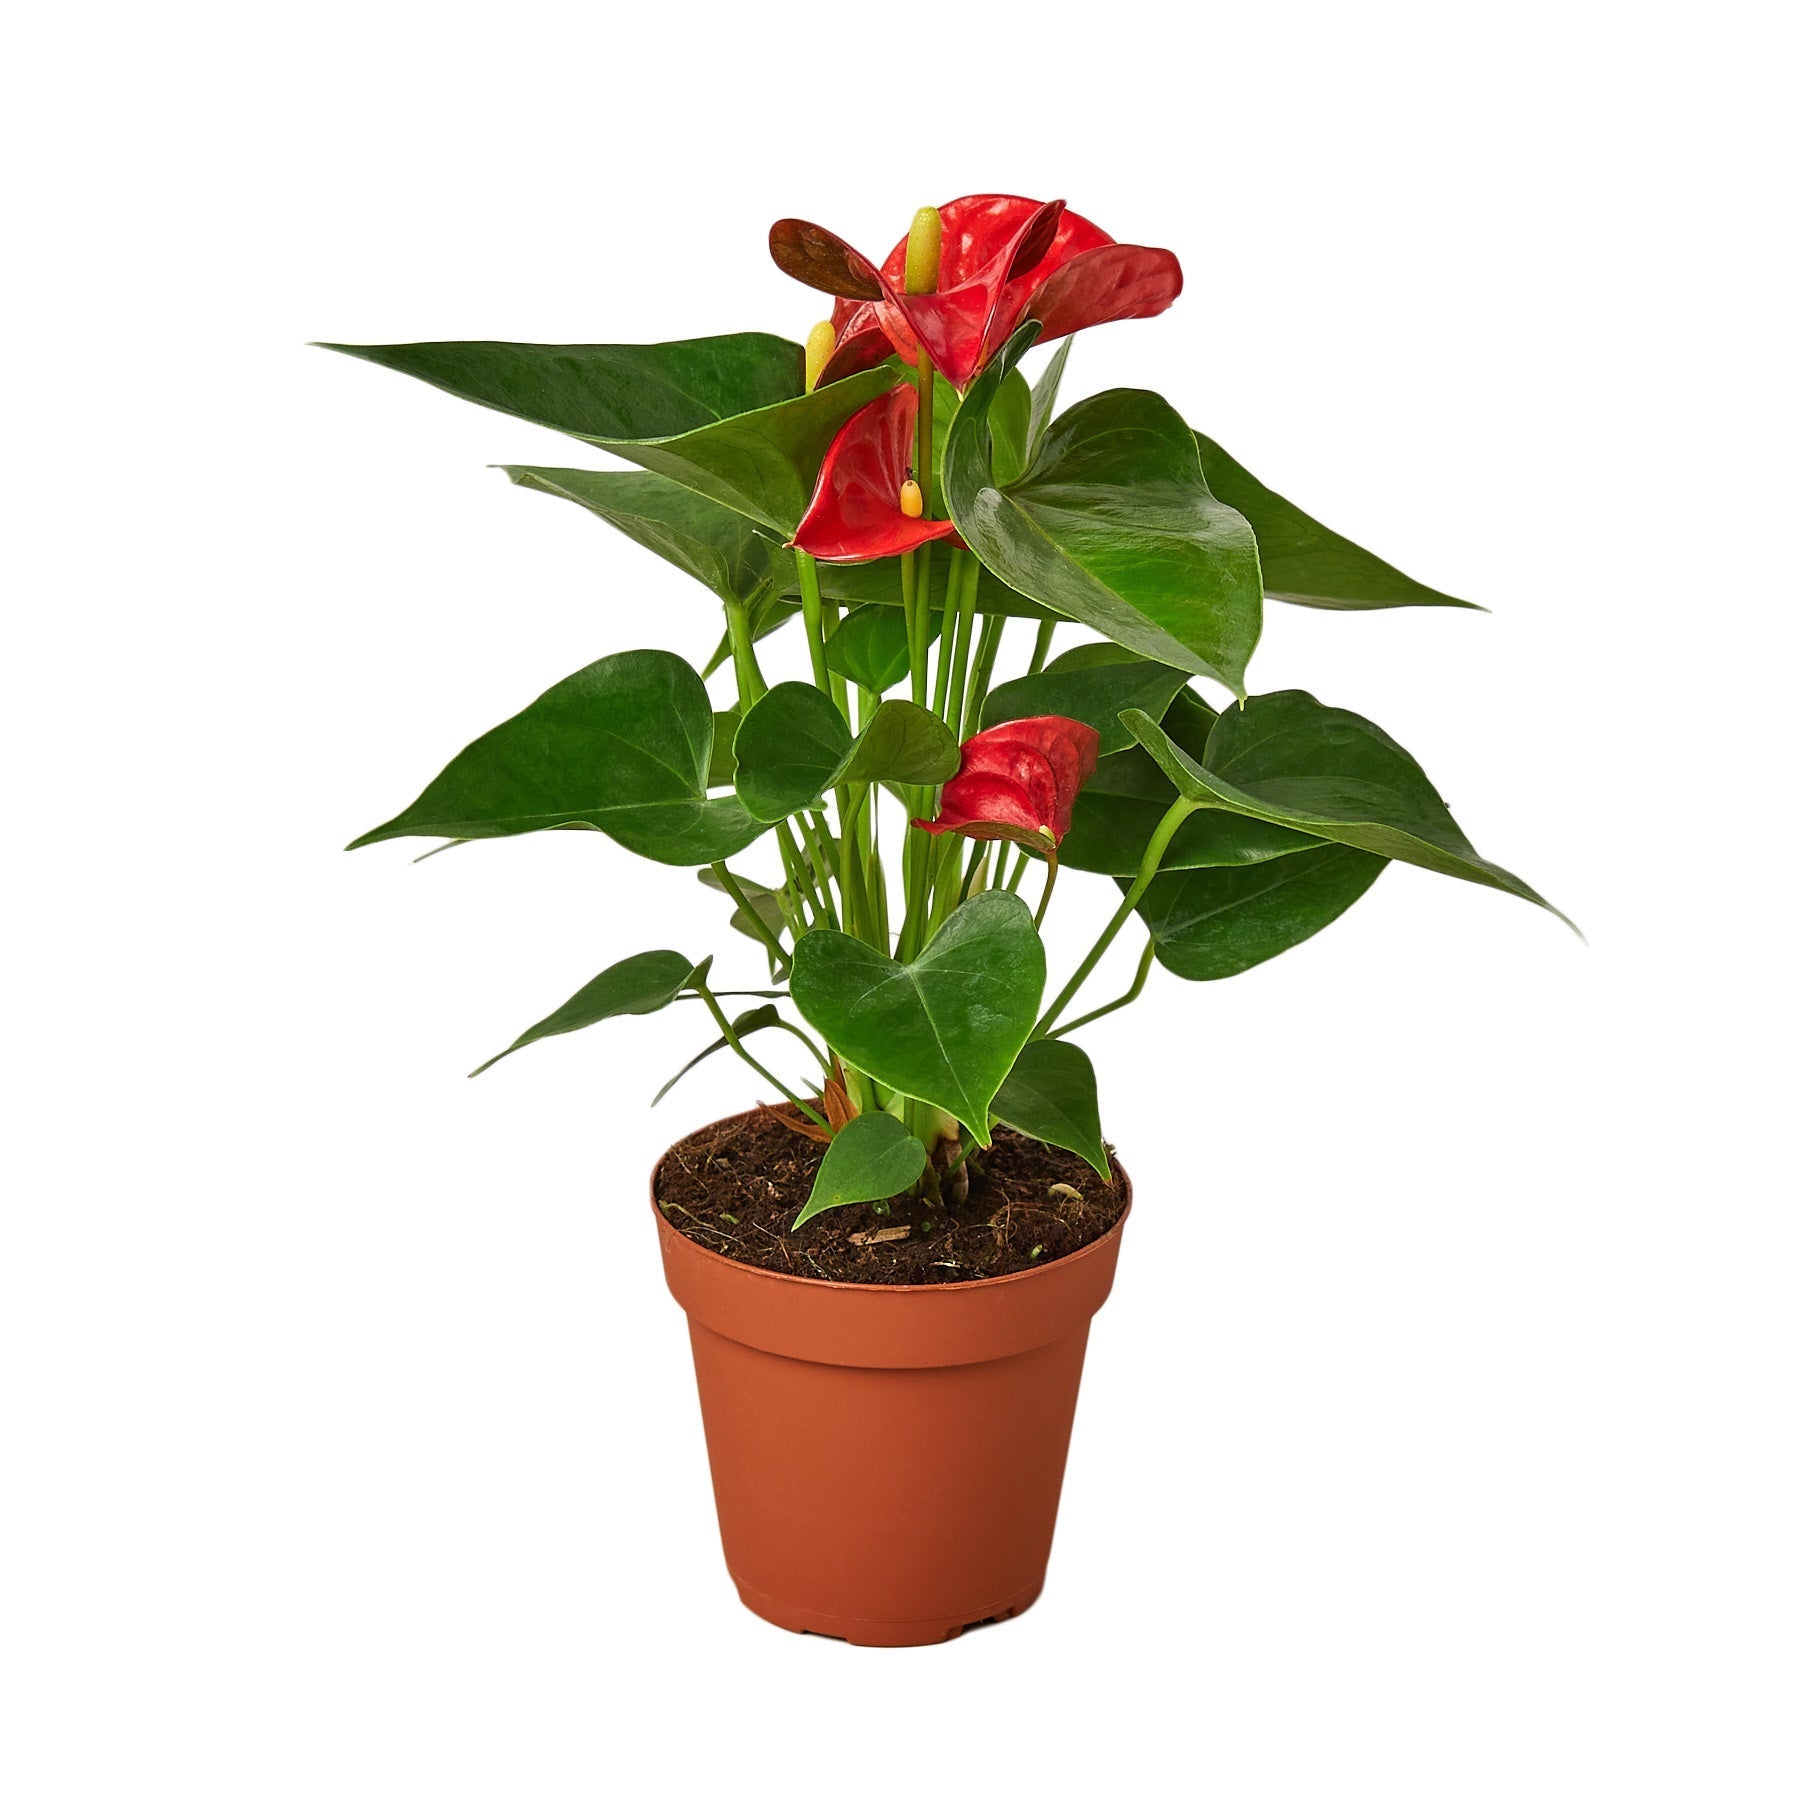 Anthurium 'Red' - 4" Pot - NURSERY POT ONLY - One Beleaf Away Plant Studio